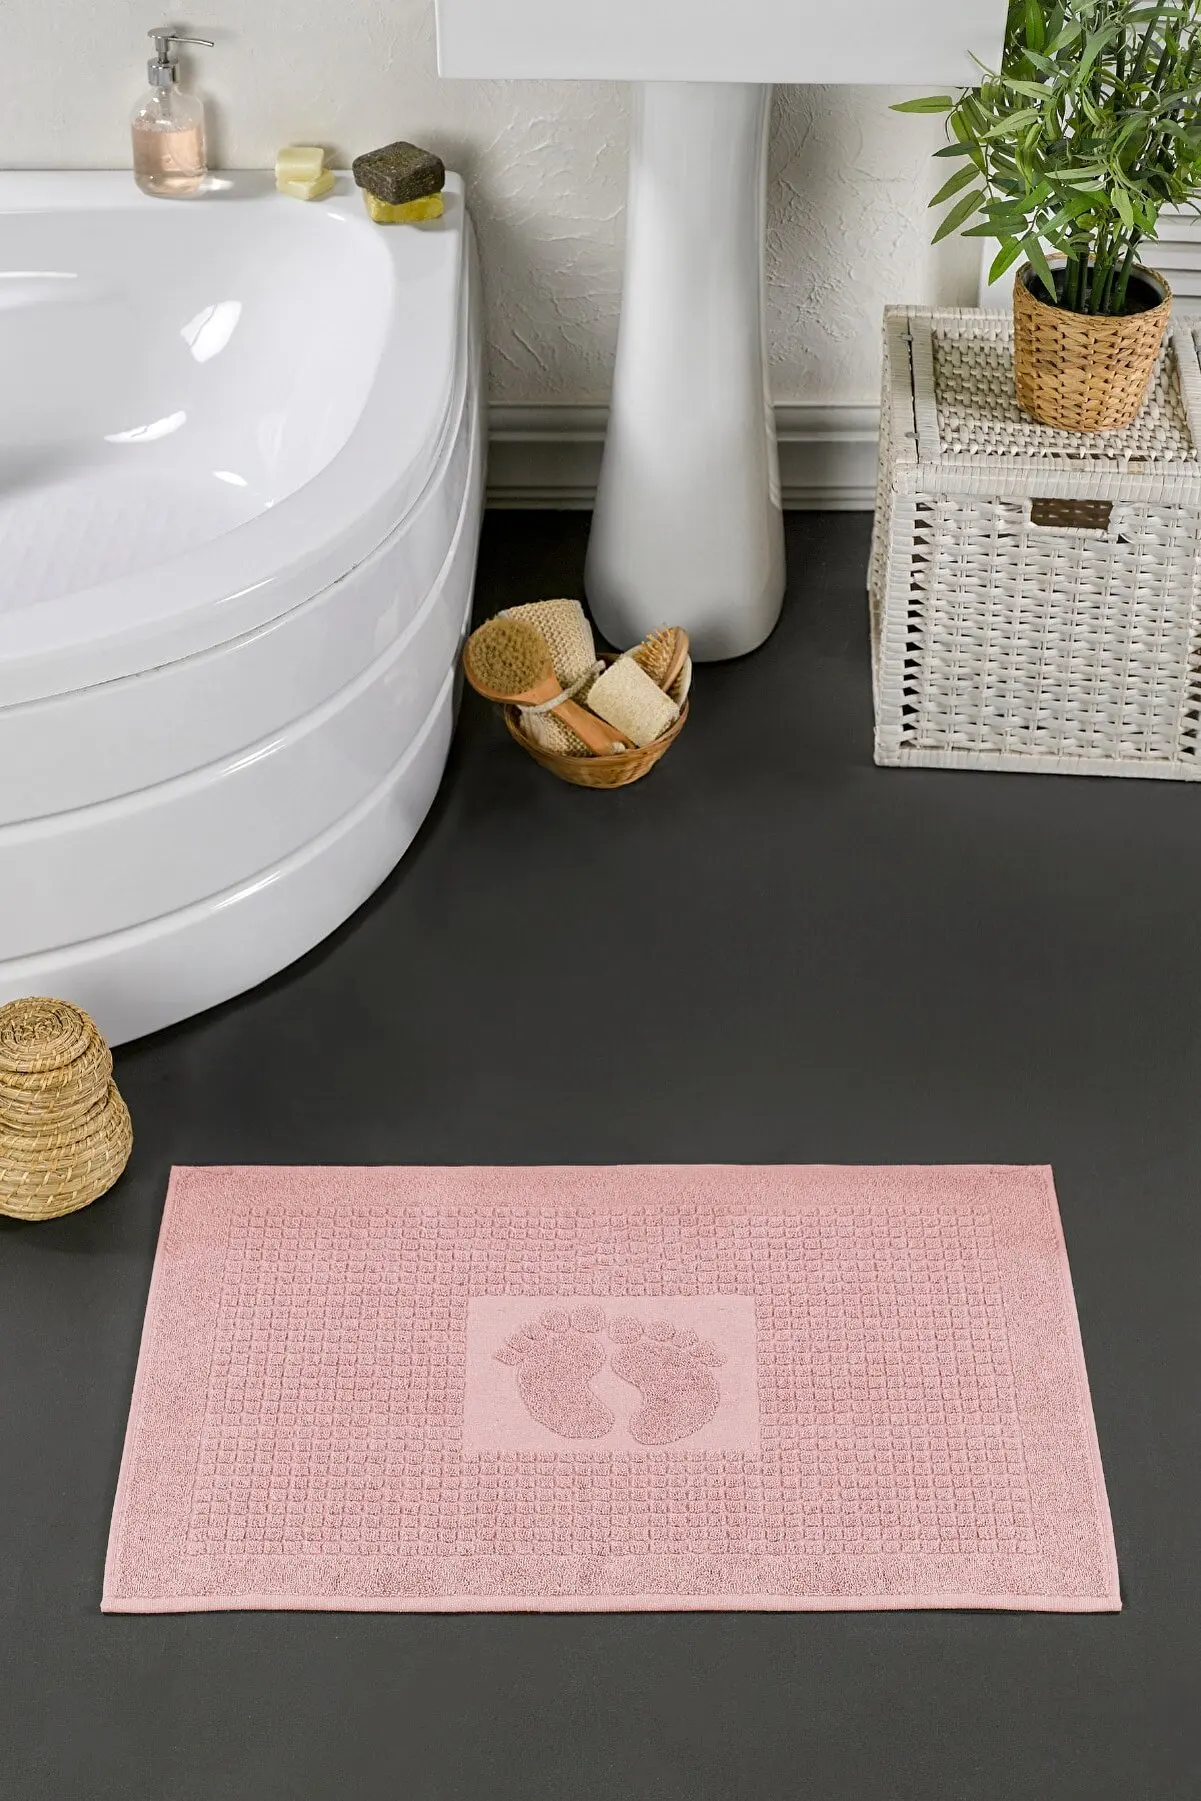 Bath Mat Floor Towel for Bathroom- Washable Bathtub Shower Sink Floor  Towels - 100% Turkish Cotton Bath Mat Foot Towels, Absorbent Machine  Washable